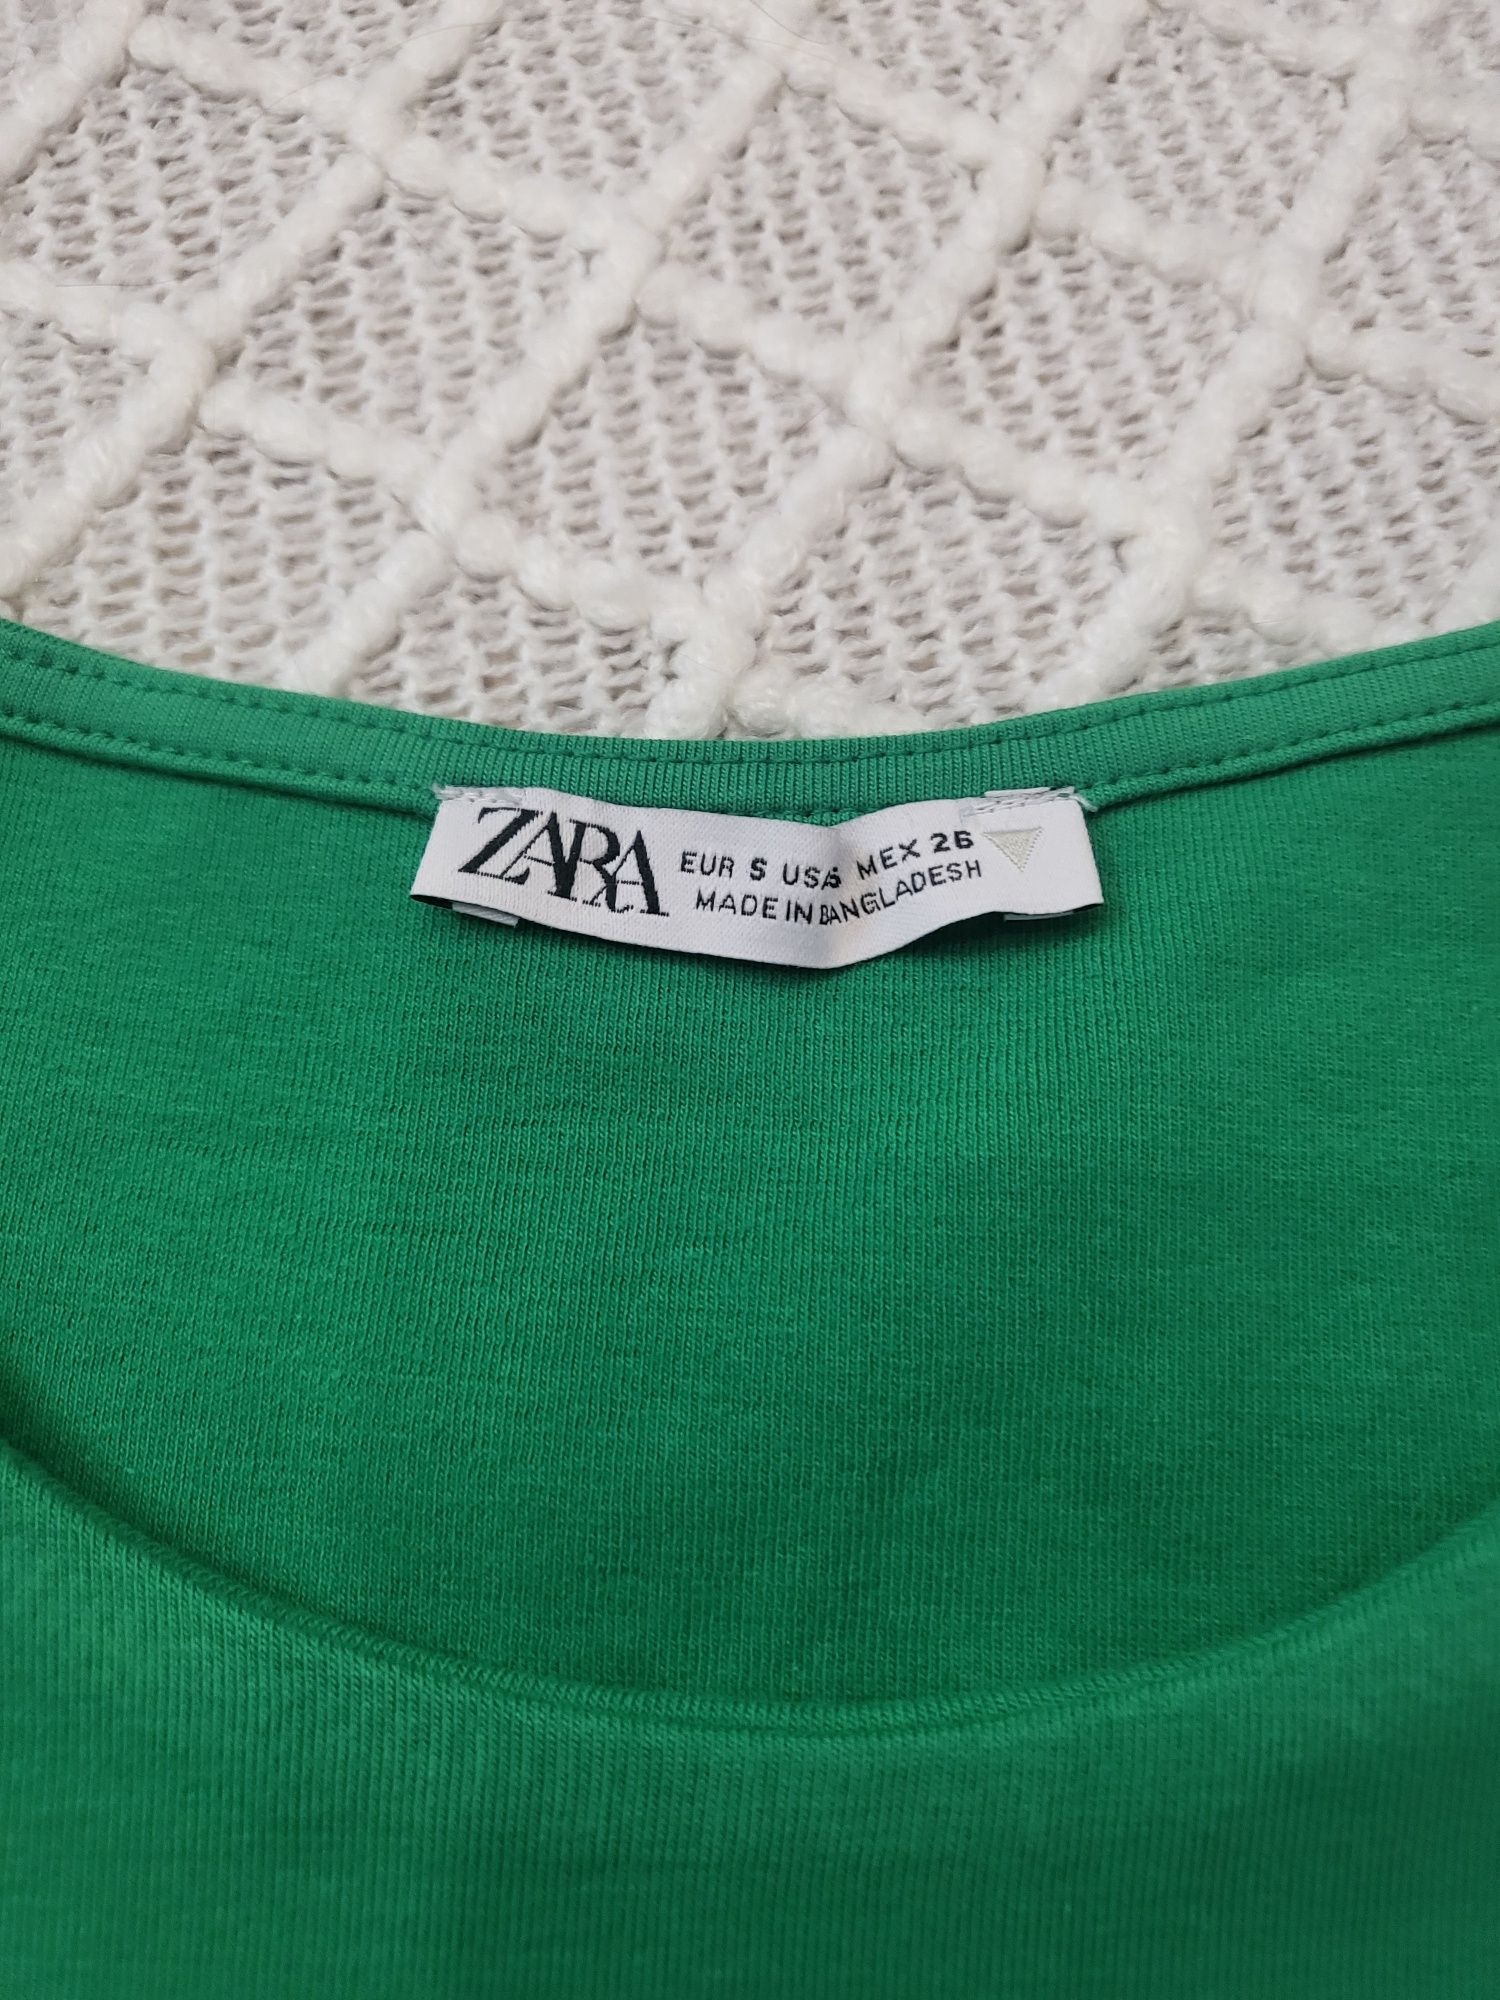 Зеленое сочное мини платье майка Zara р. Xs-s
Длина 80см
Грудь 31-43см